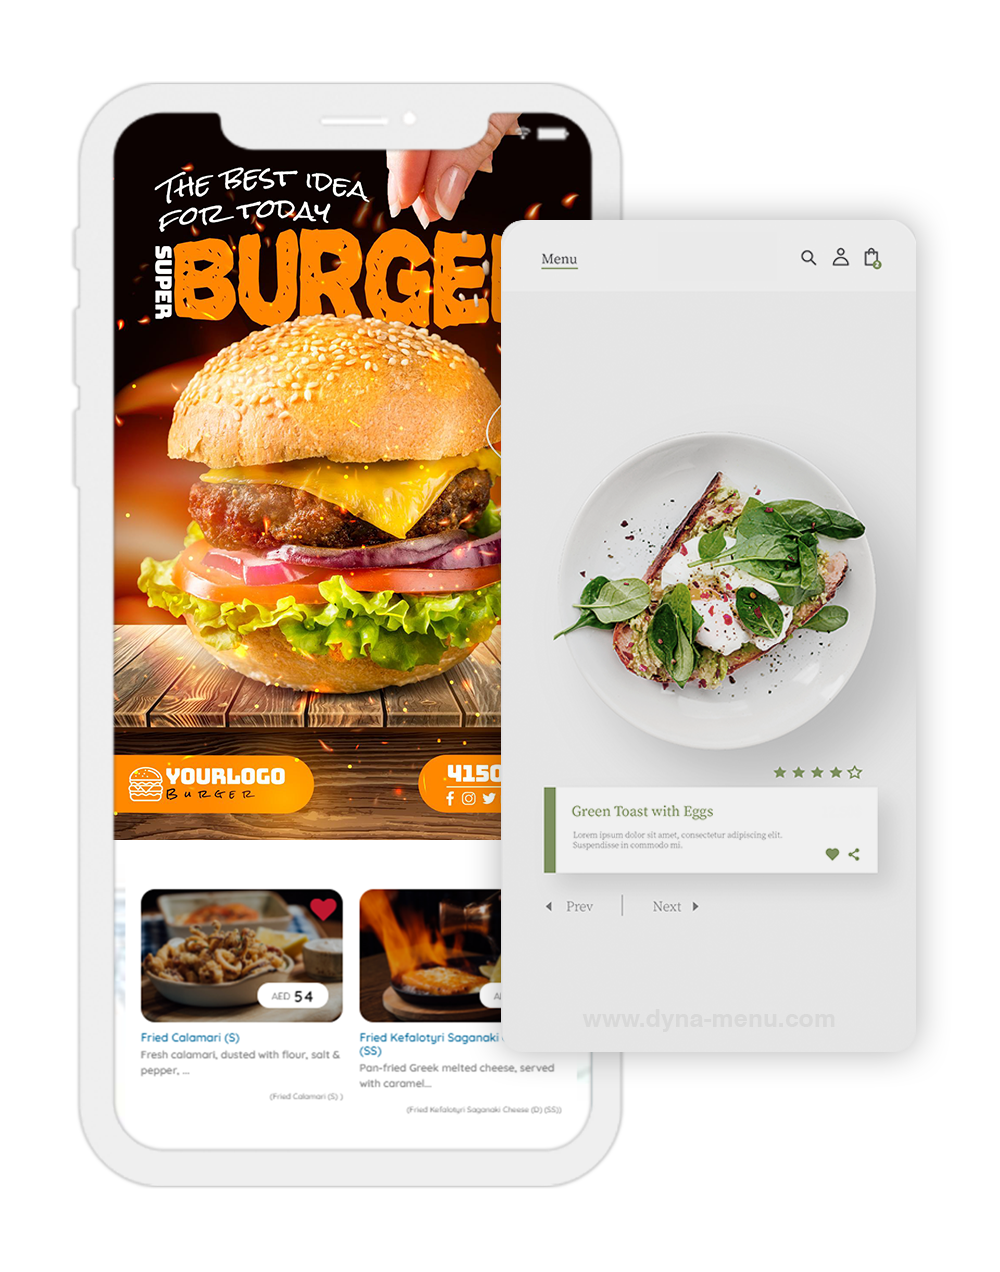 dyna-menu | Mobile App Features